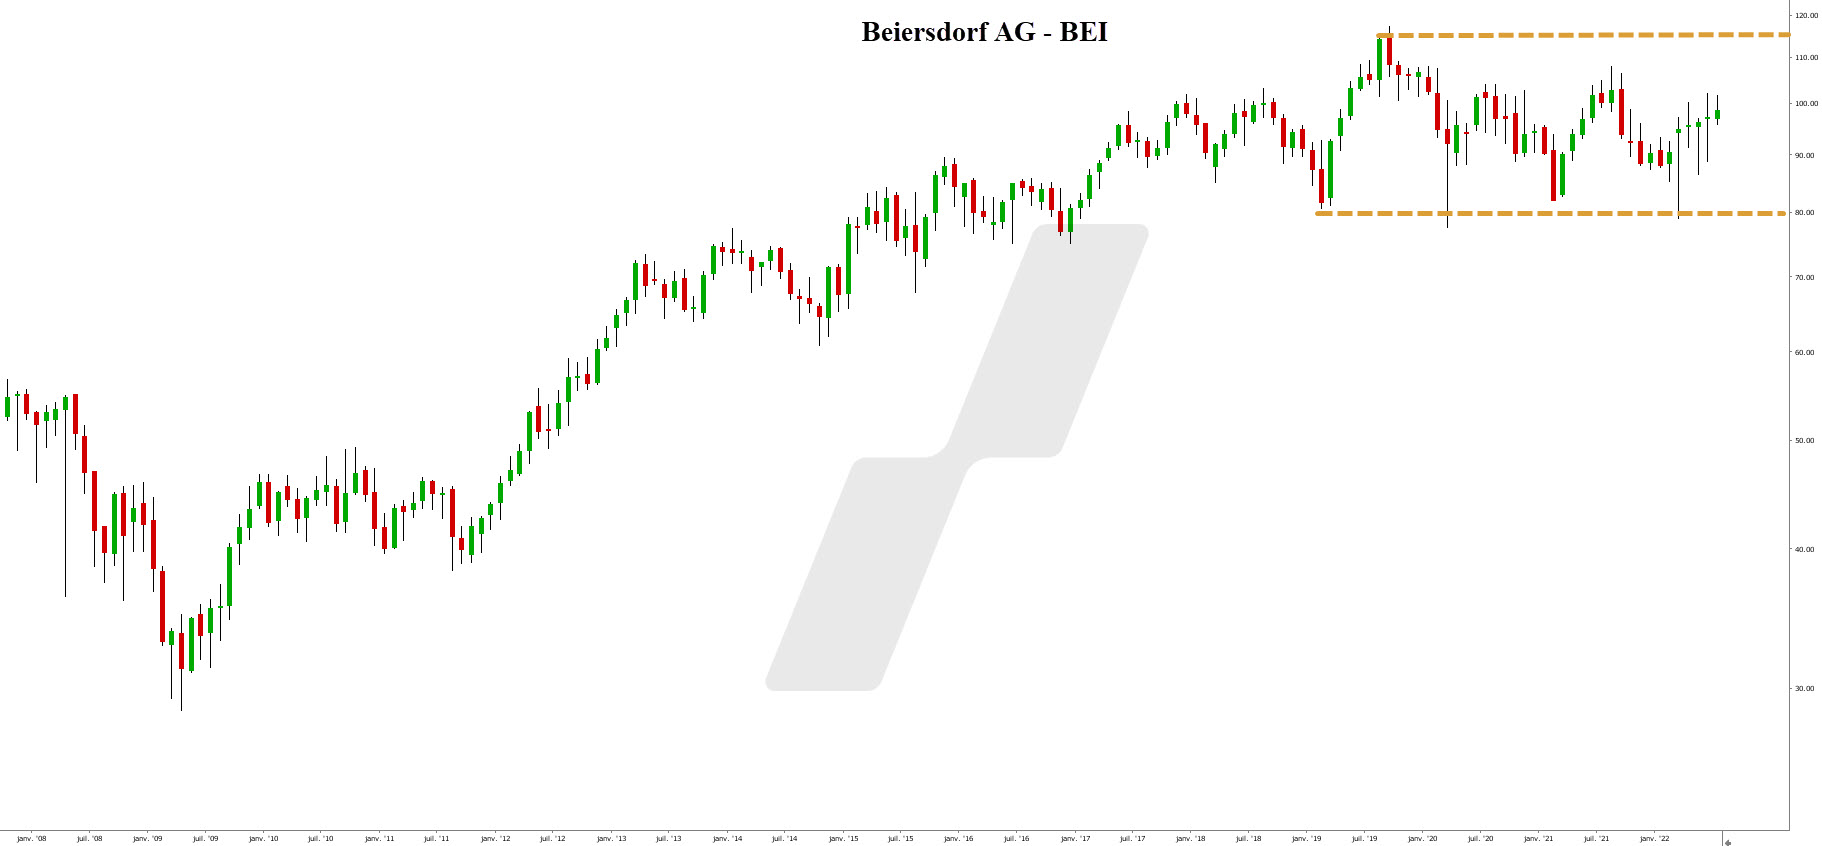 meilleures actions allemandes - graphique Beiersdorf